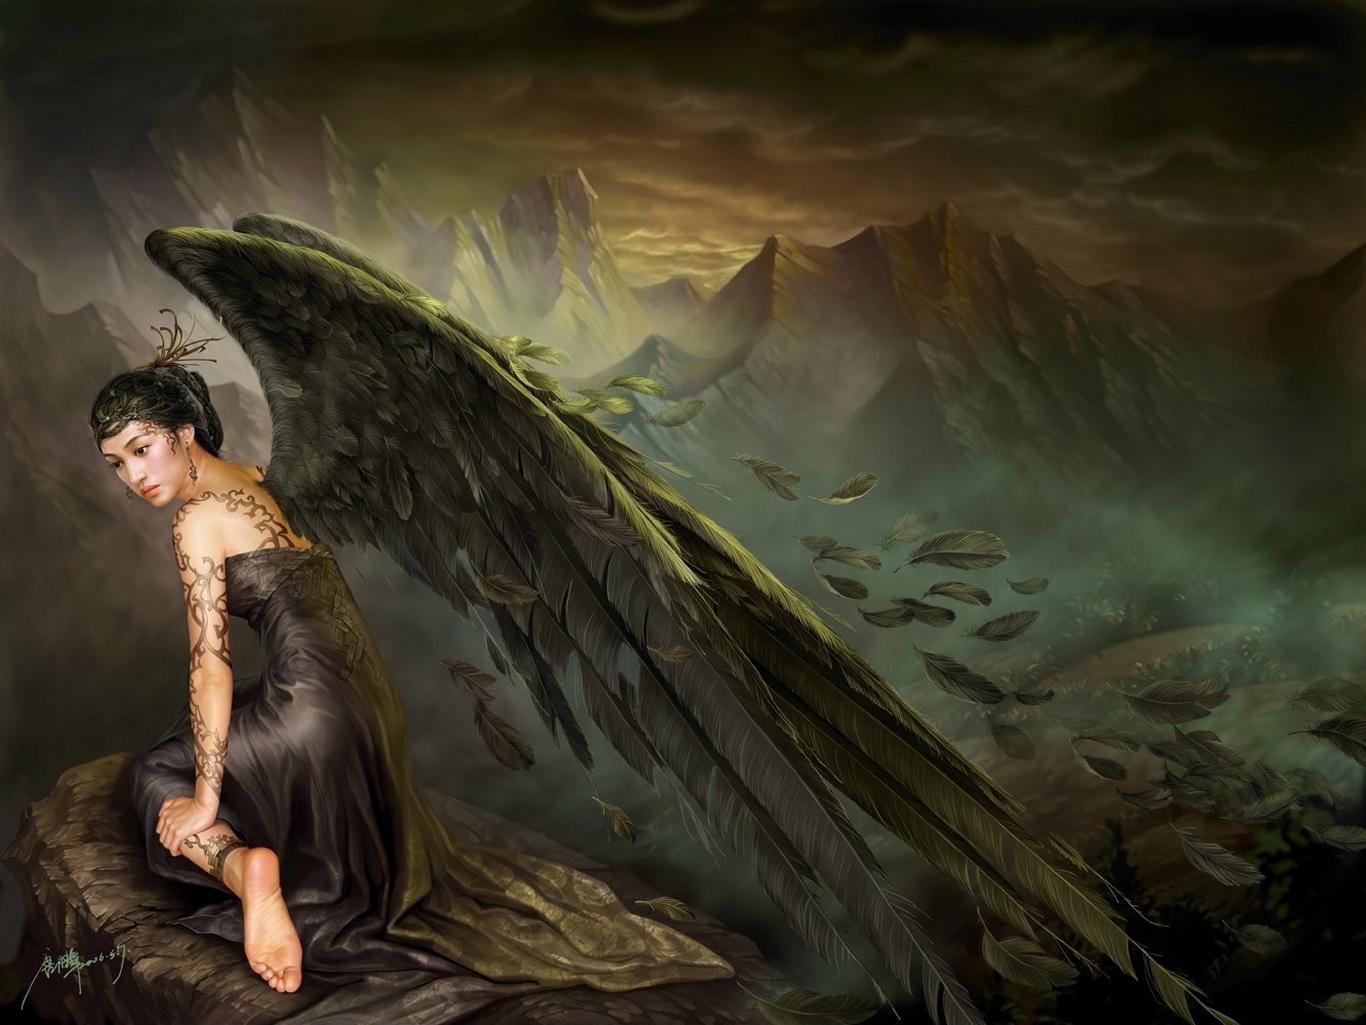 schwarzer engel tapete,cg kunstwerk,mythologie,erfundener charakter,kunst,illustration